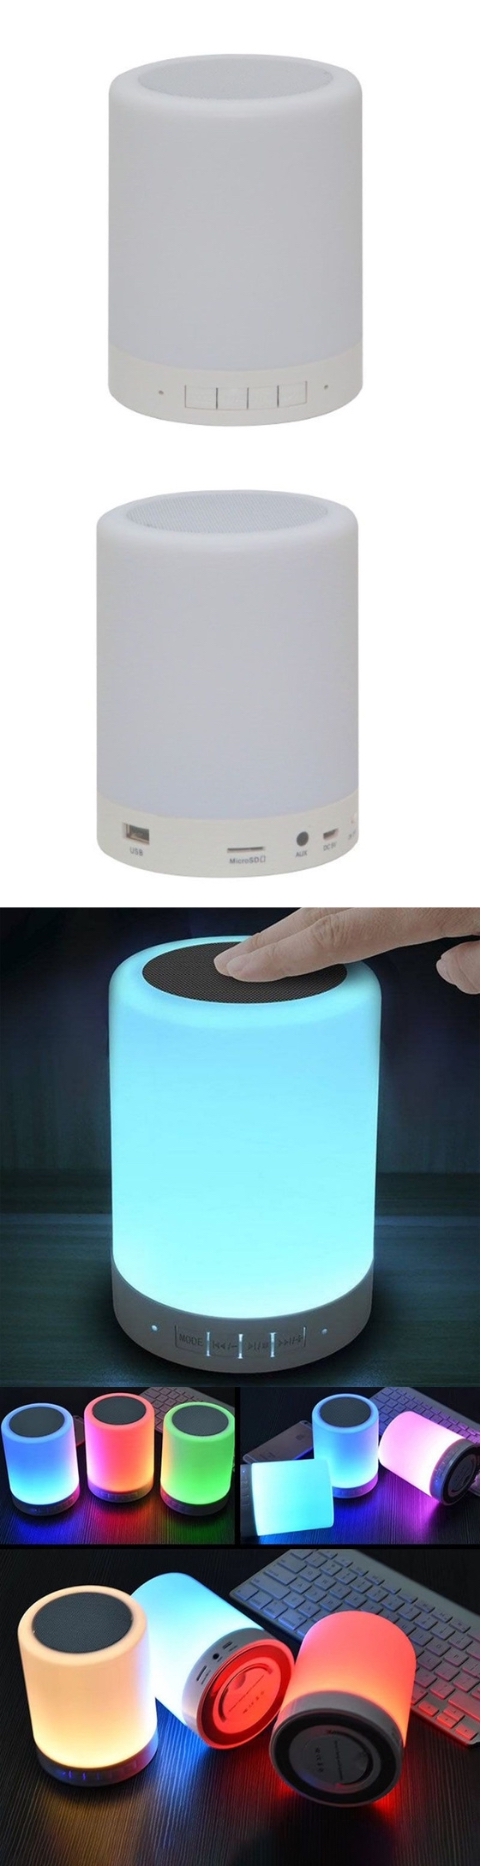 LED-lamppu Bluetooth kaiuttimella | Tarjous jopa -55 %